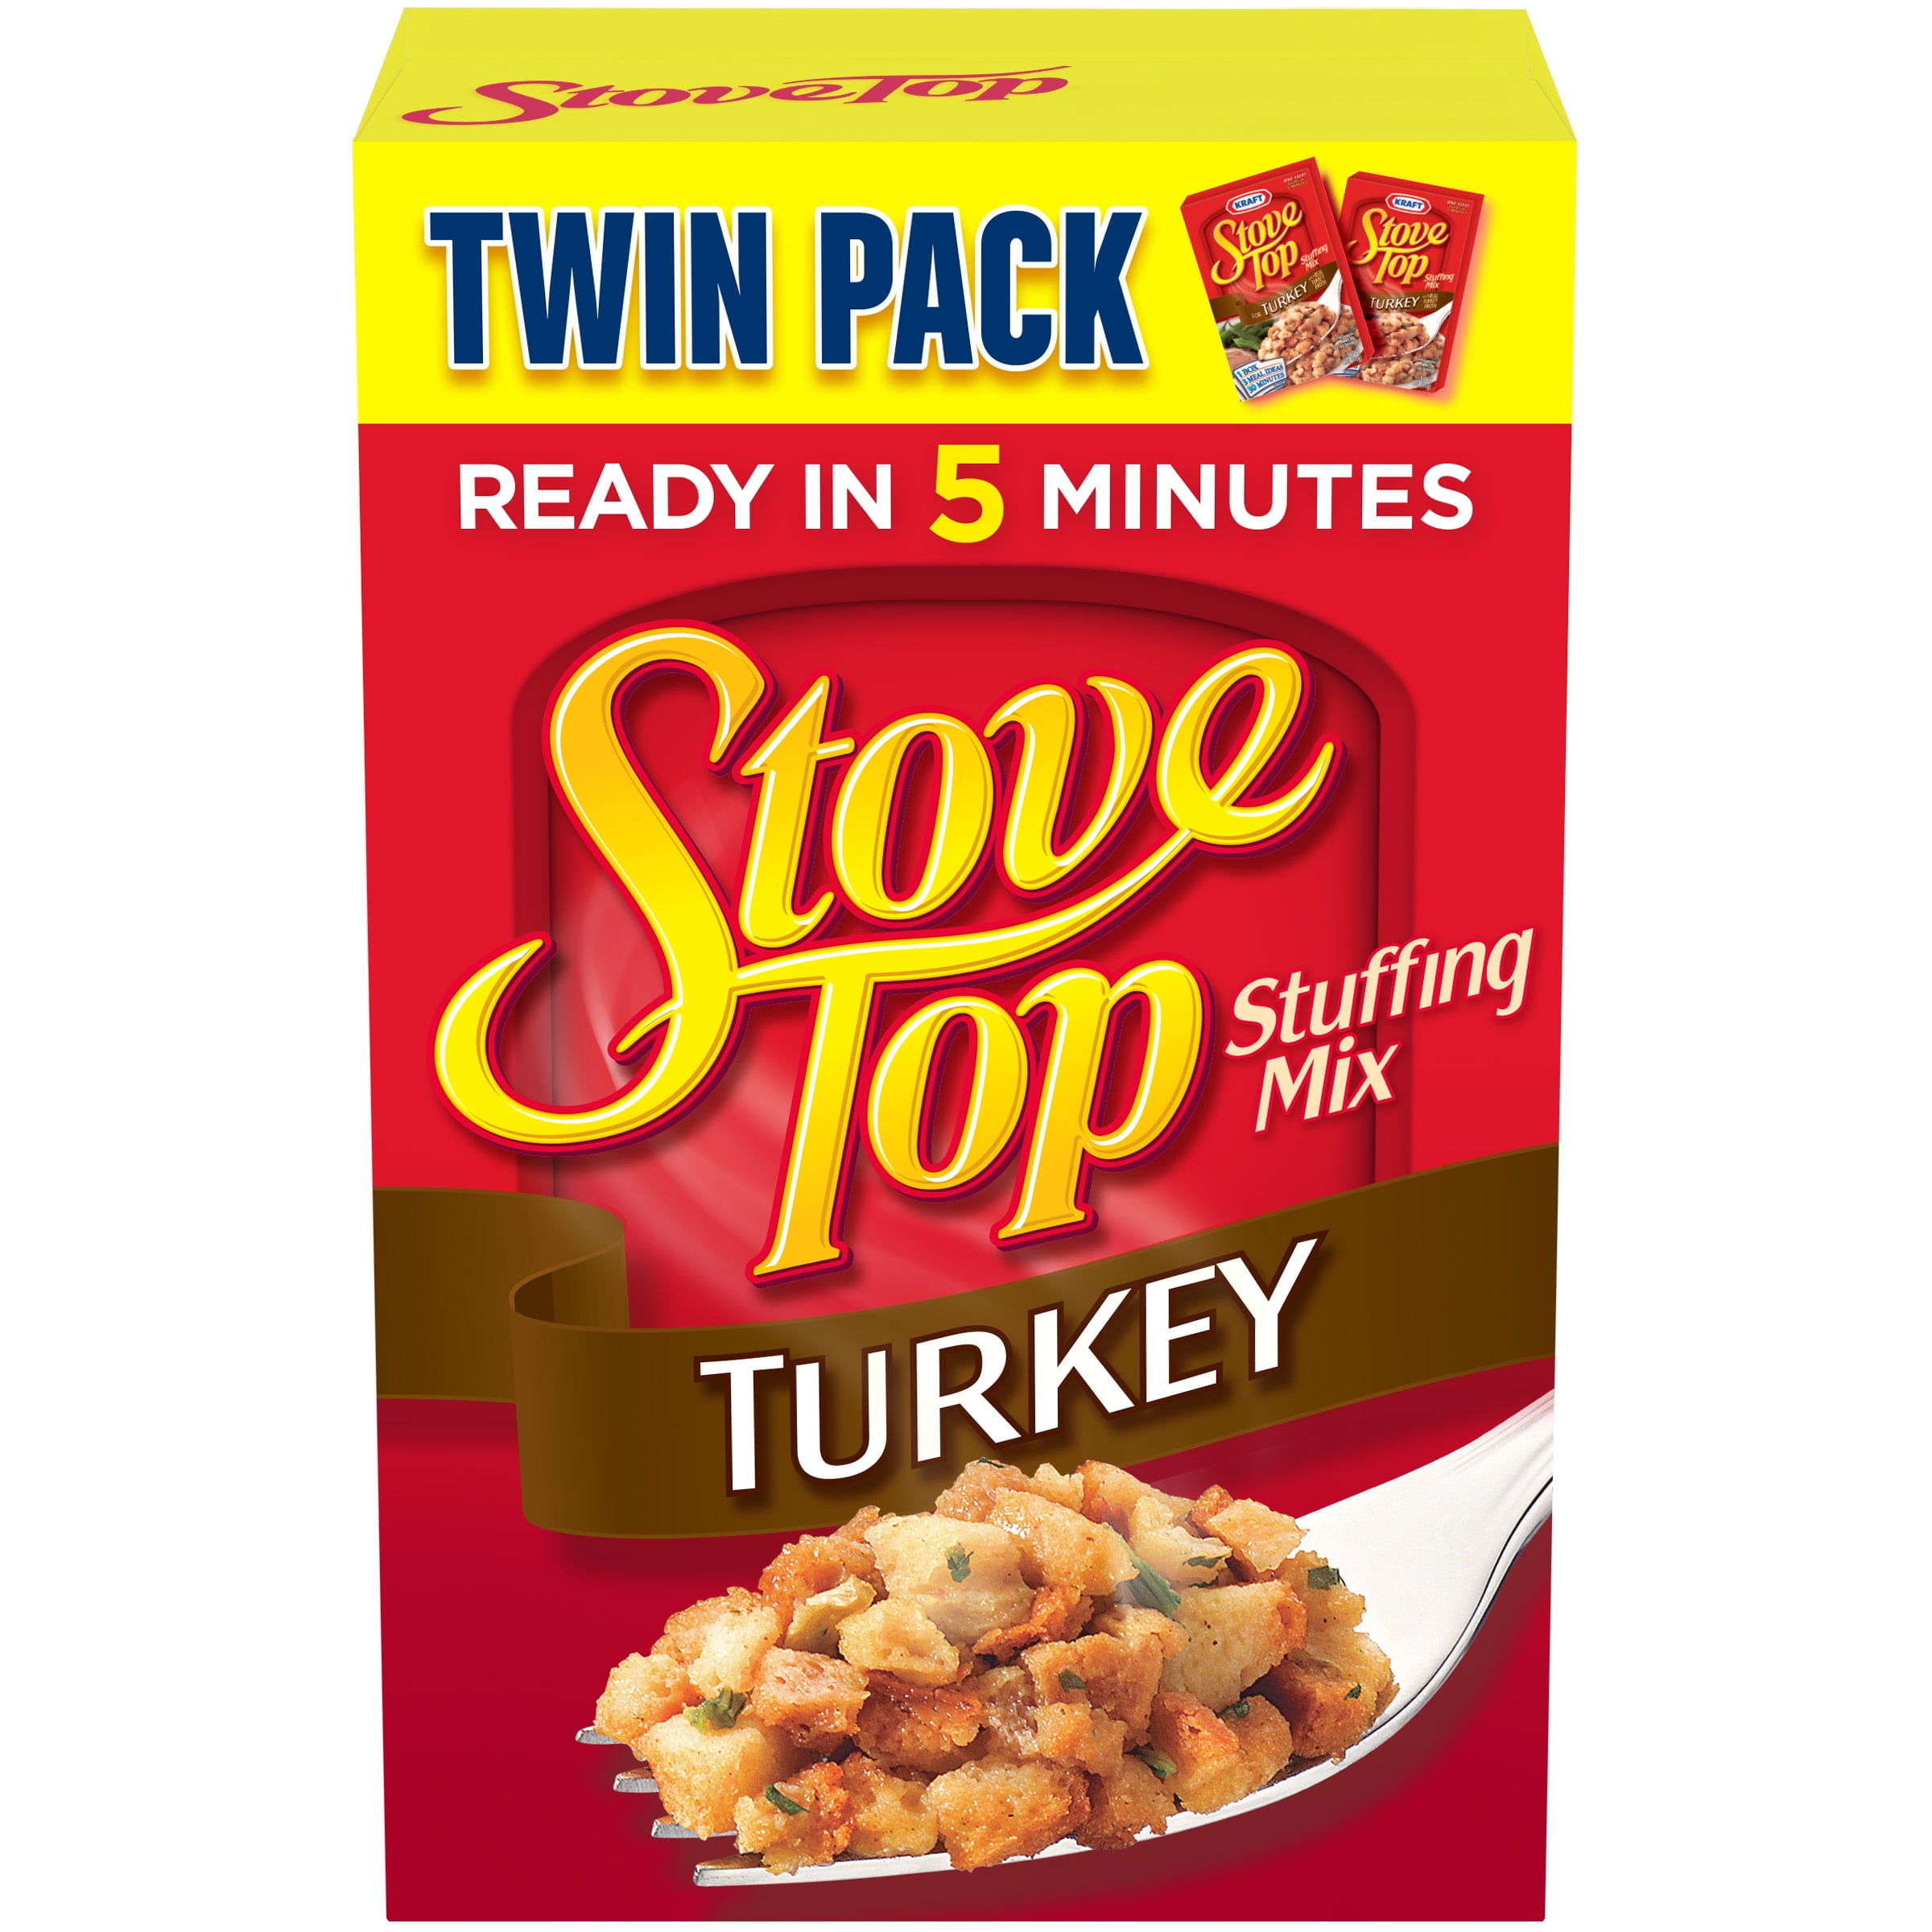 Stove Top Stuffing Mix, Turkey, Twin Pack - 12 oz